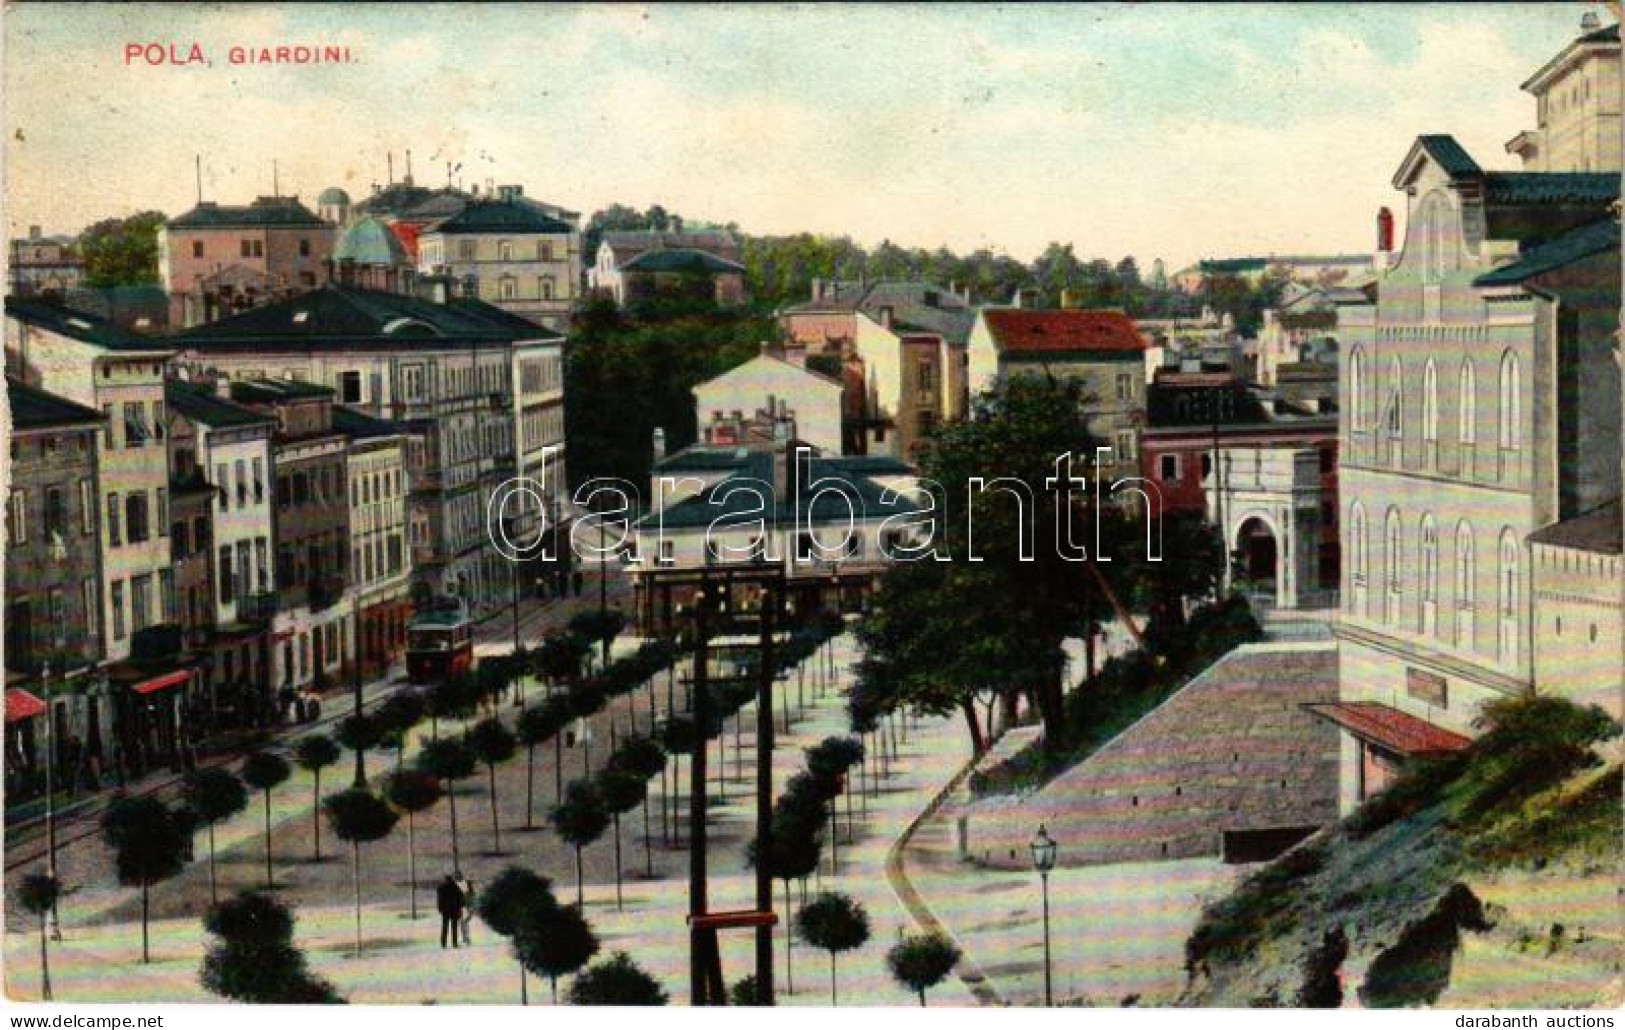 T2/T3 1909 Pola, Pula; Giardini / Square, Tram. G. Fano, POla, 1908/9. No. 7. (Rb) - Unclassified